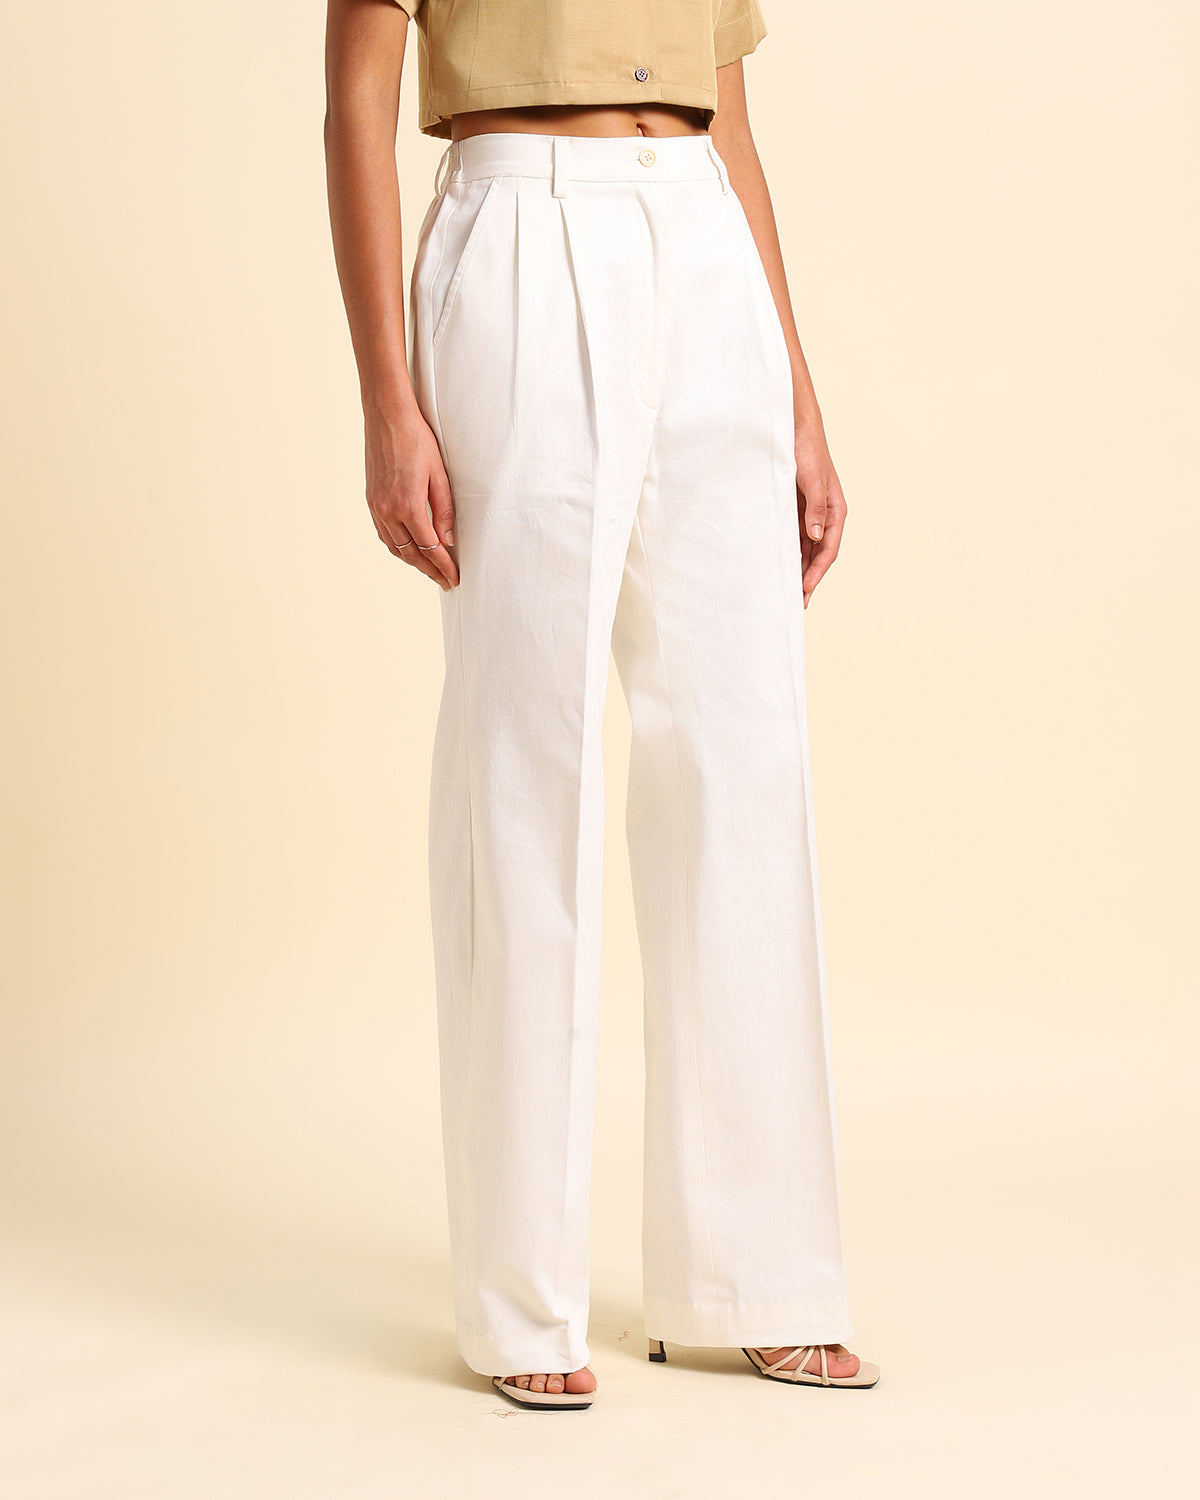 Stretchable Organic Cotton Korean Pants - White